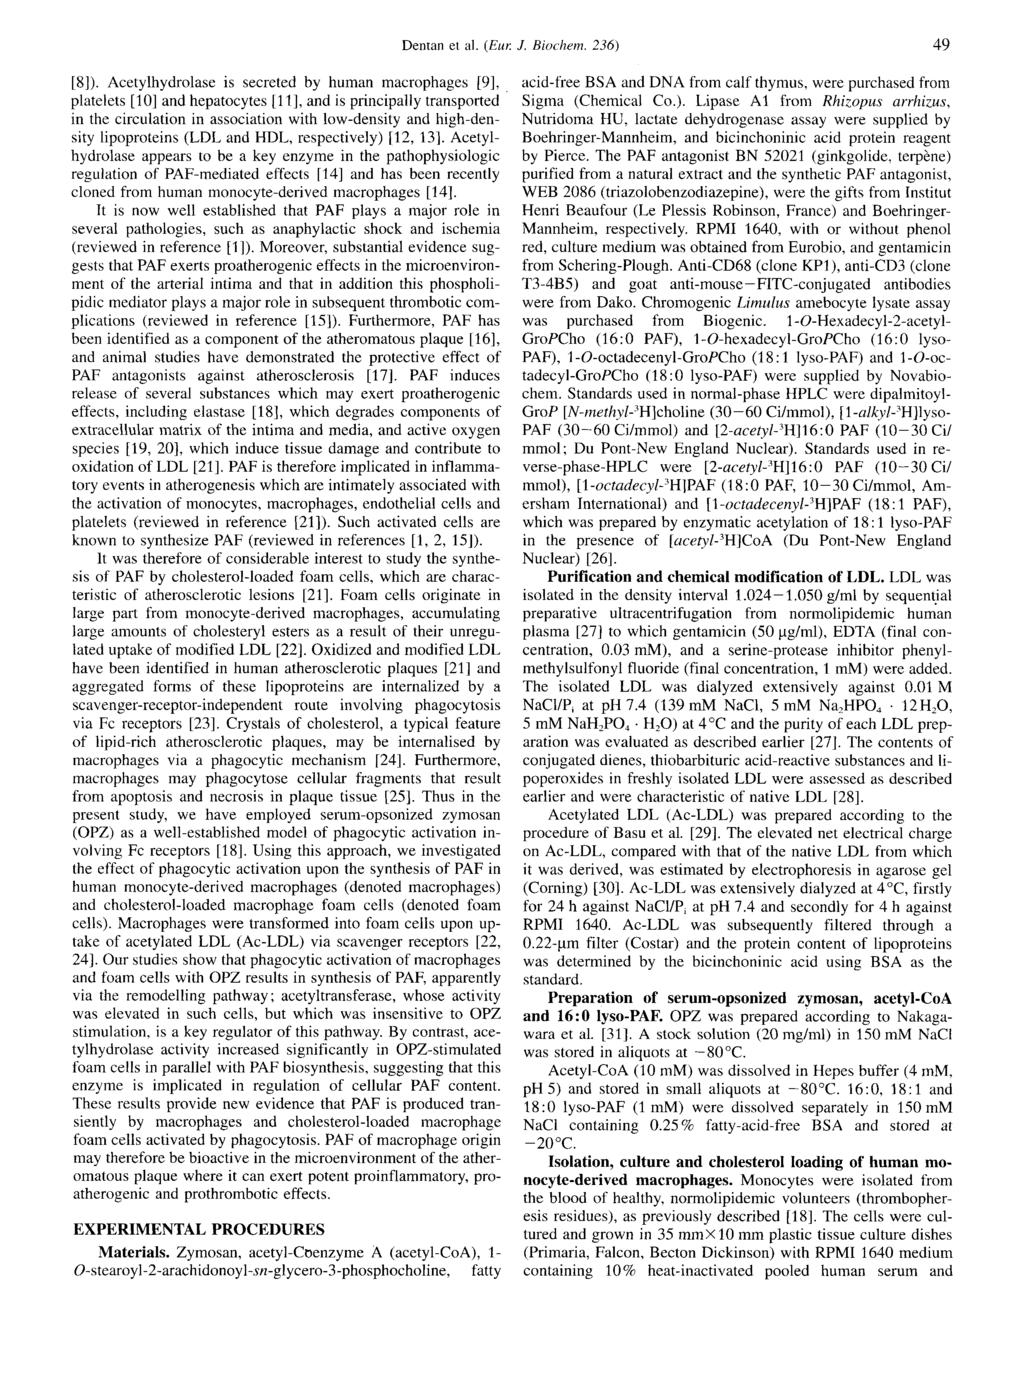 Dentan et al. (EUK J. Biochem. 236) 49 [S]).